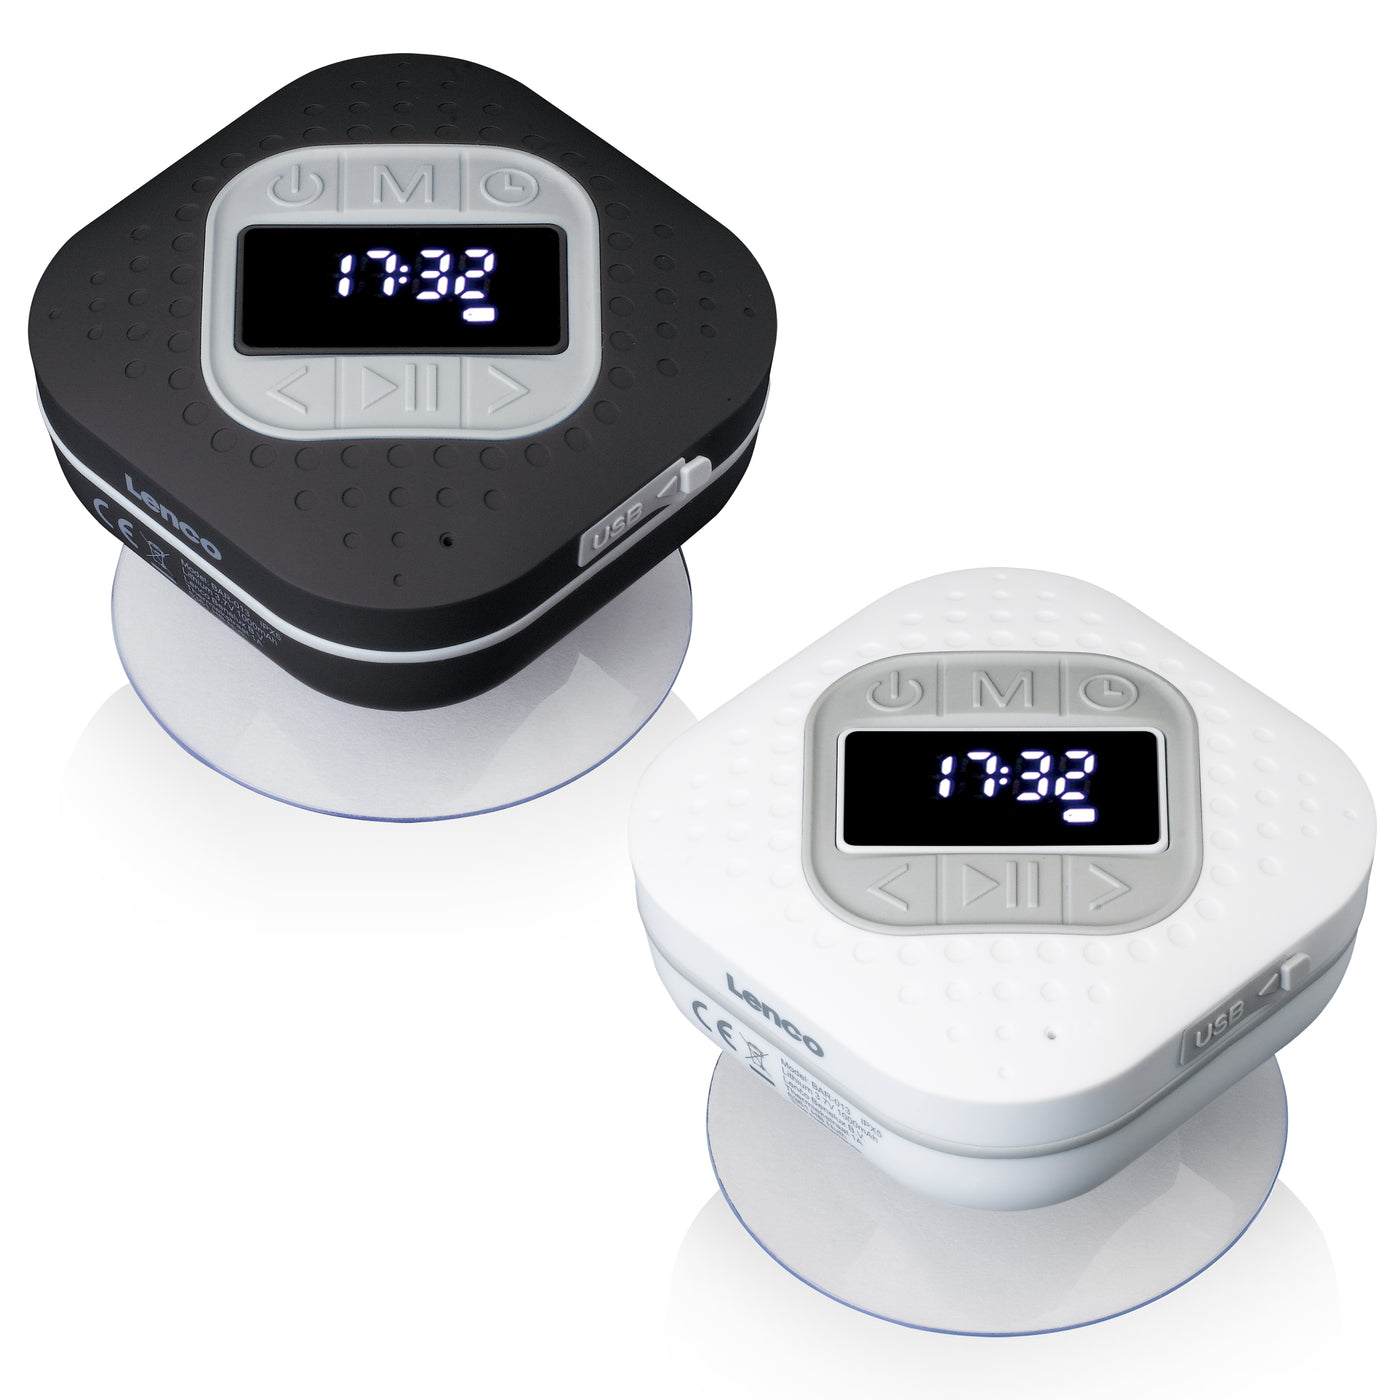 LENCO BAR-013BK - Waterproof bath and kitchen FM radio with Bluetooth® and timer - Black